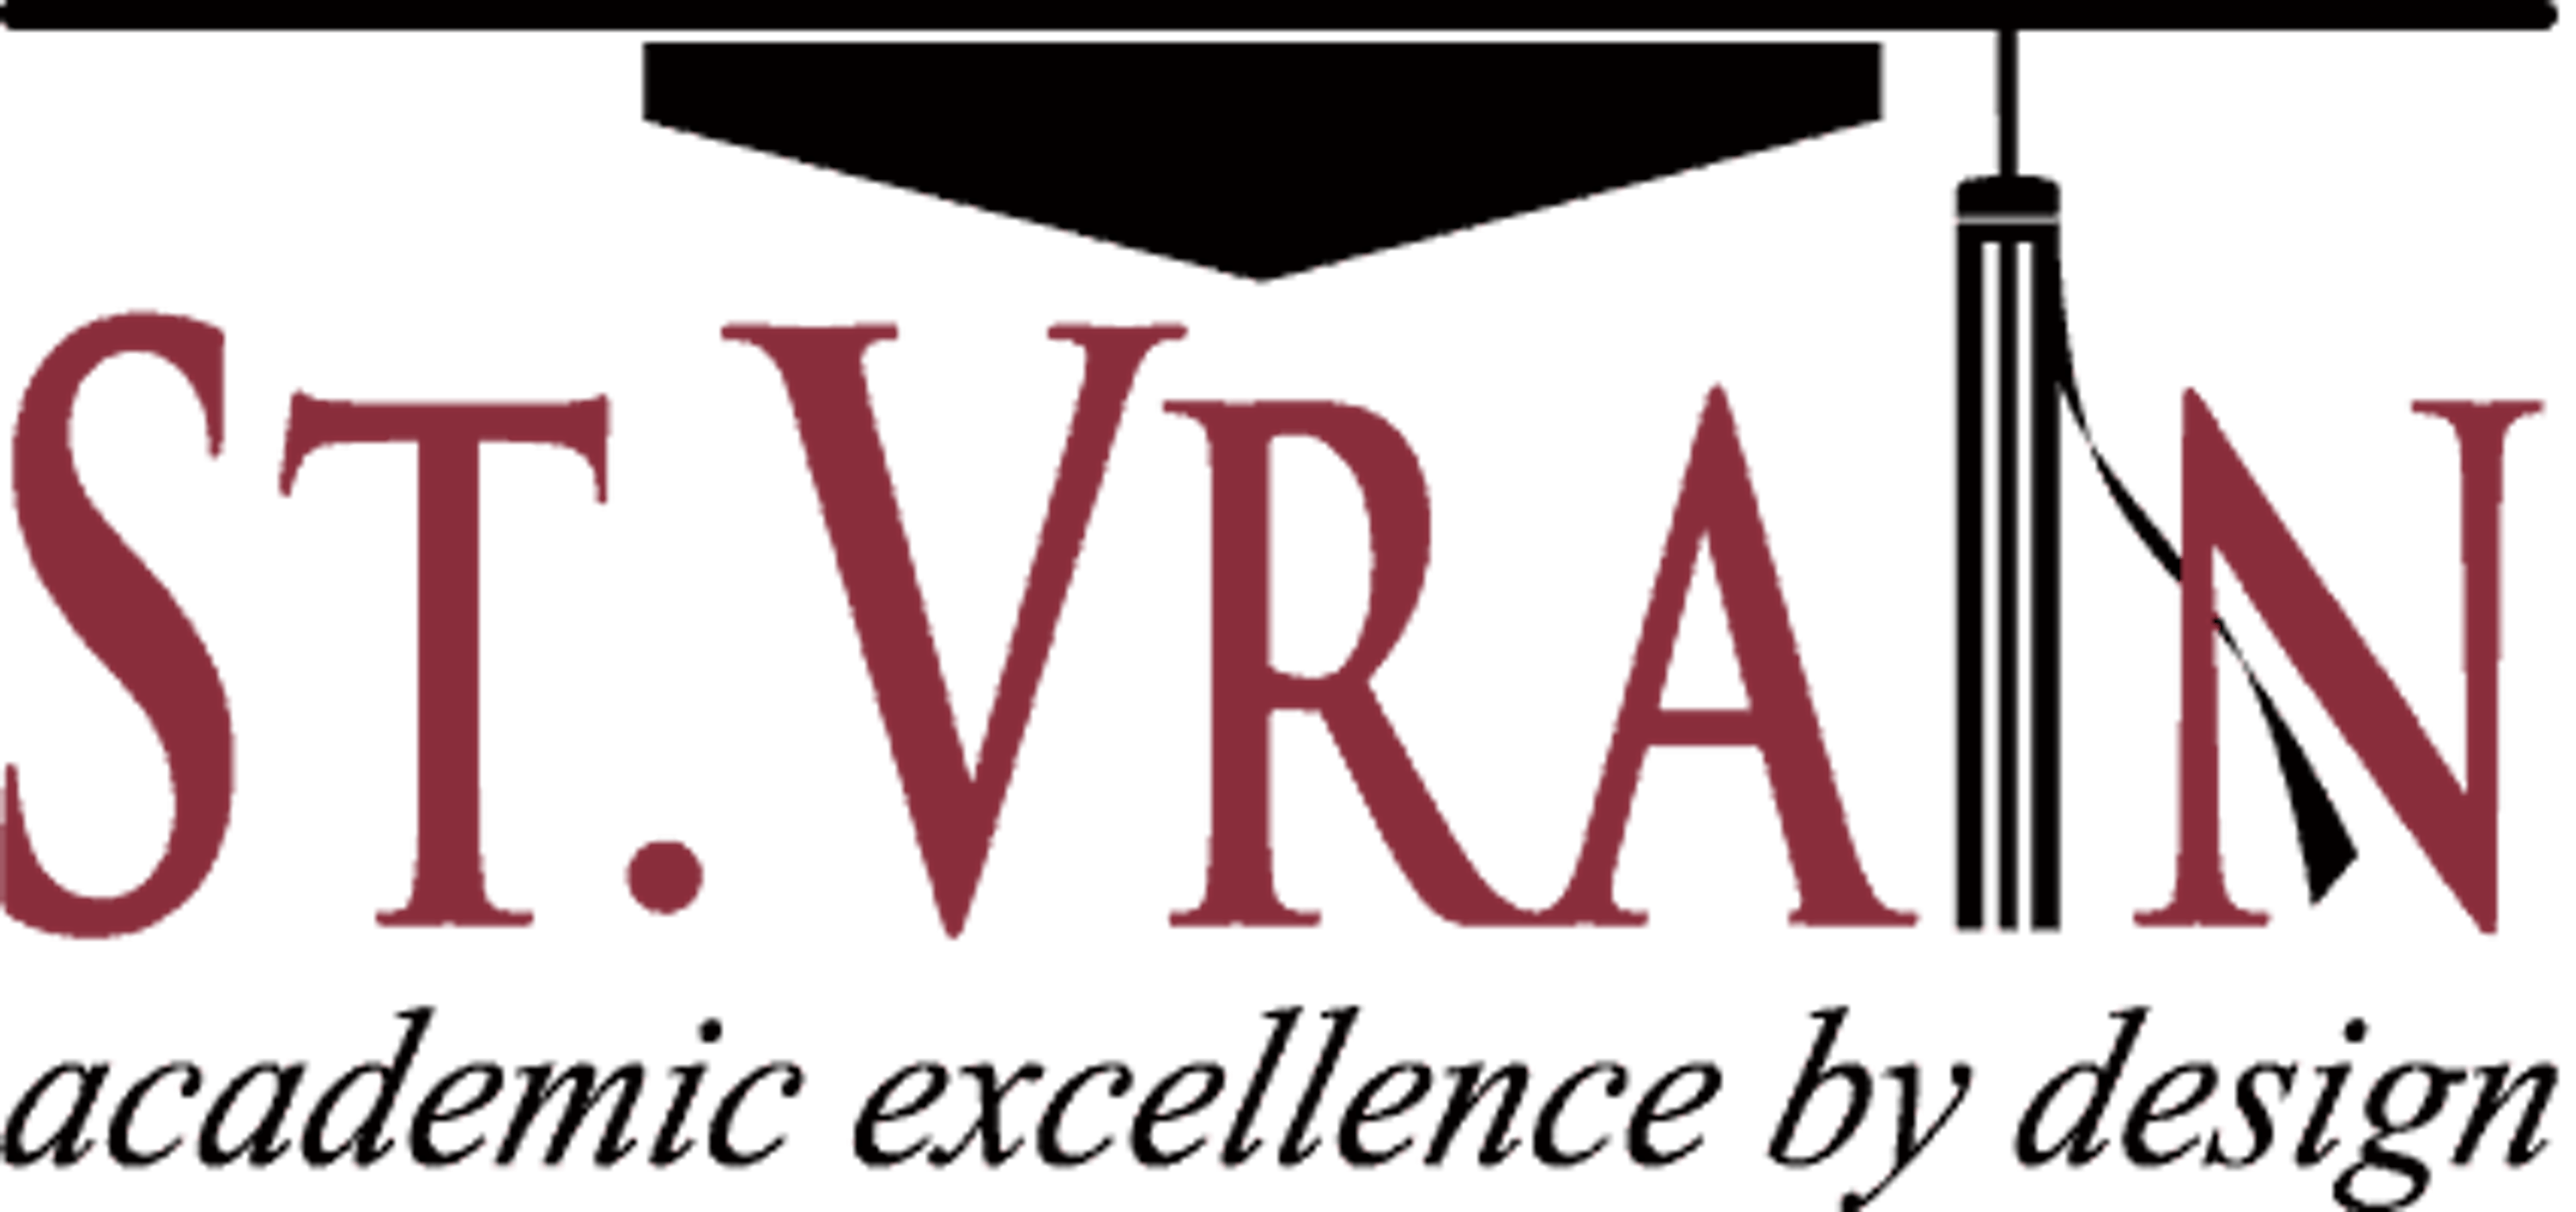 St Vrain School District Logo